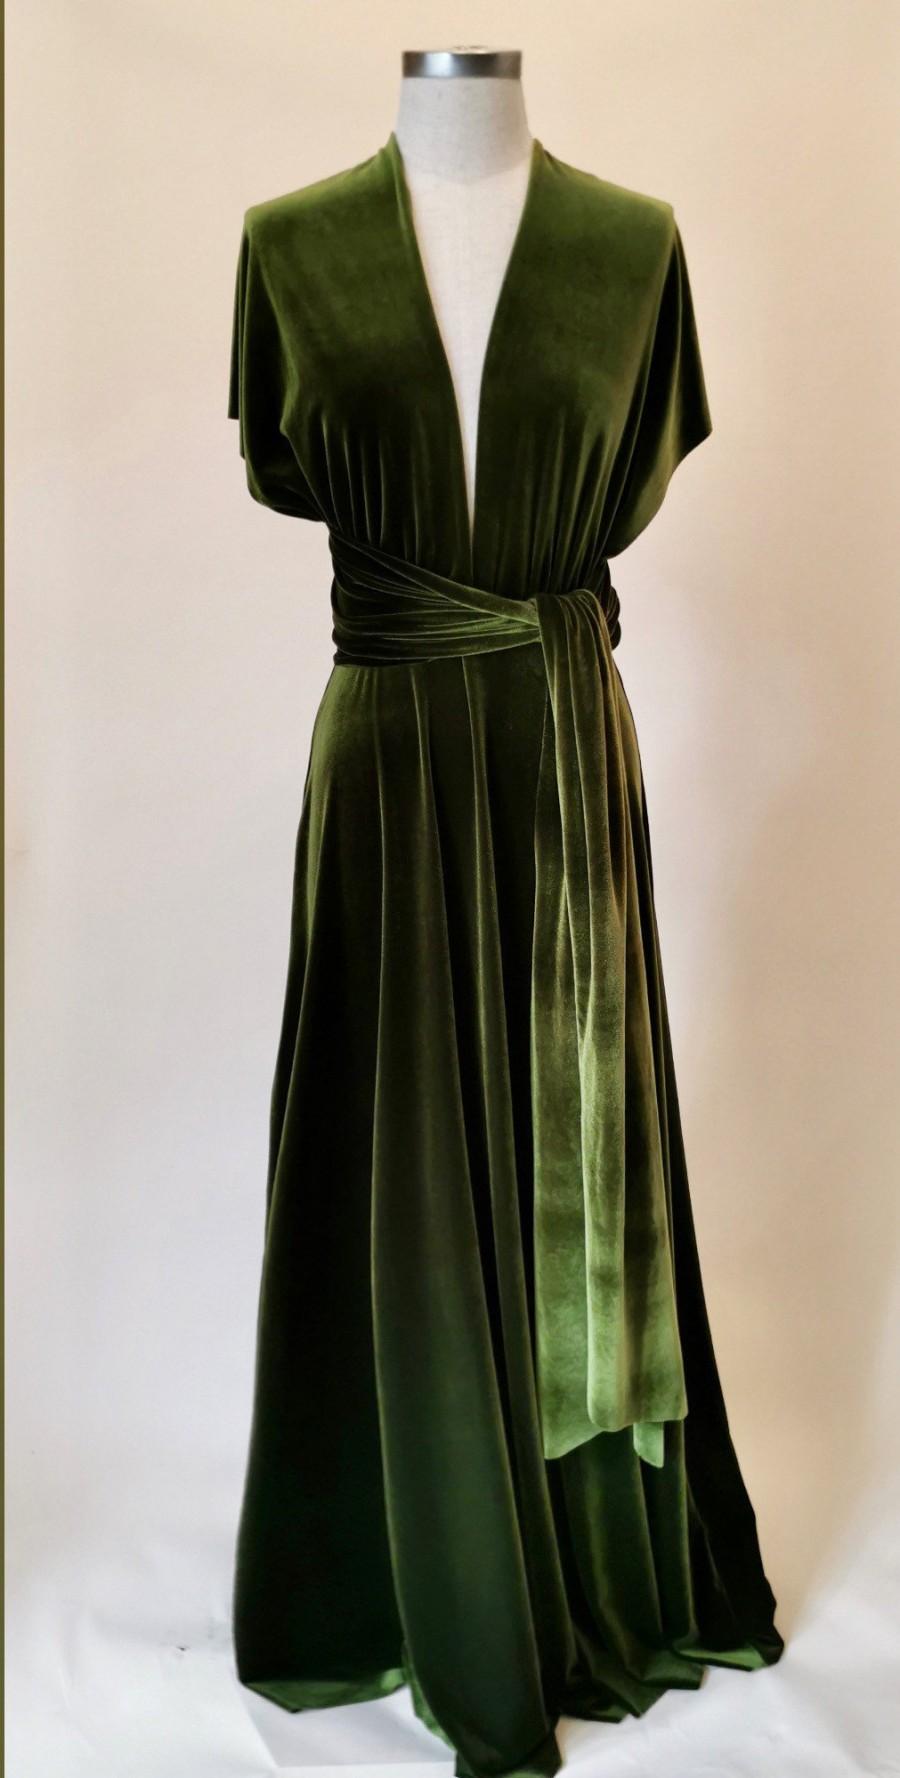 Wedding - Olive green velvet dress, infinity dress, bridesmaid dress, prom dress, ball gown, long dress, multiway dress, convertible dress, party dres